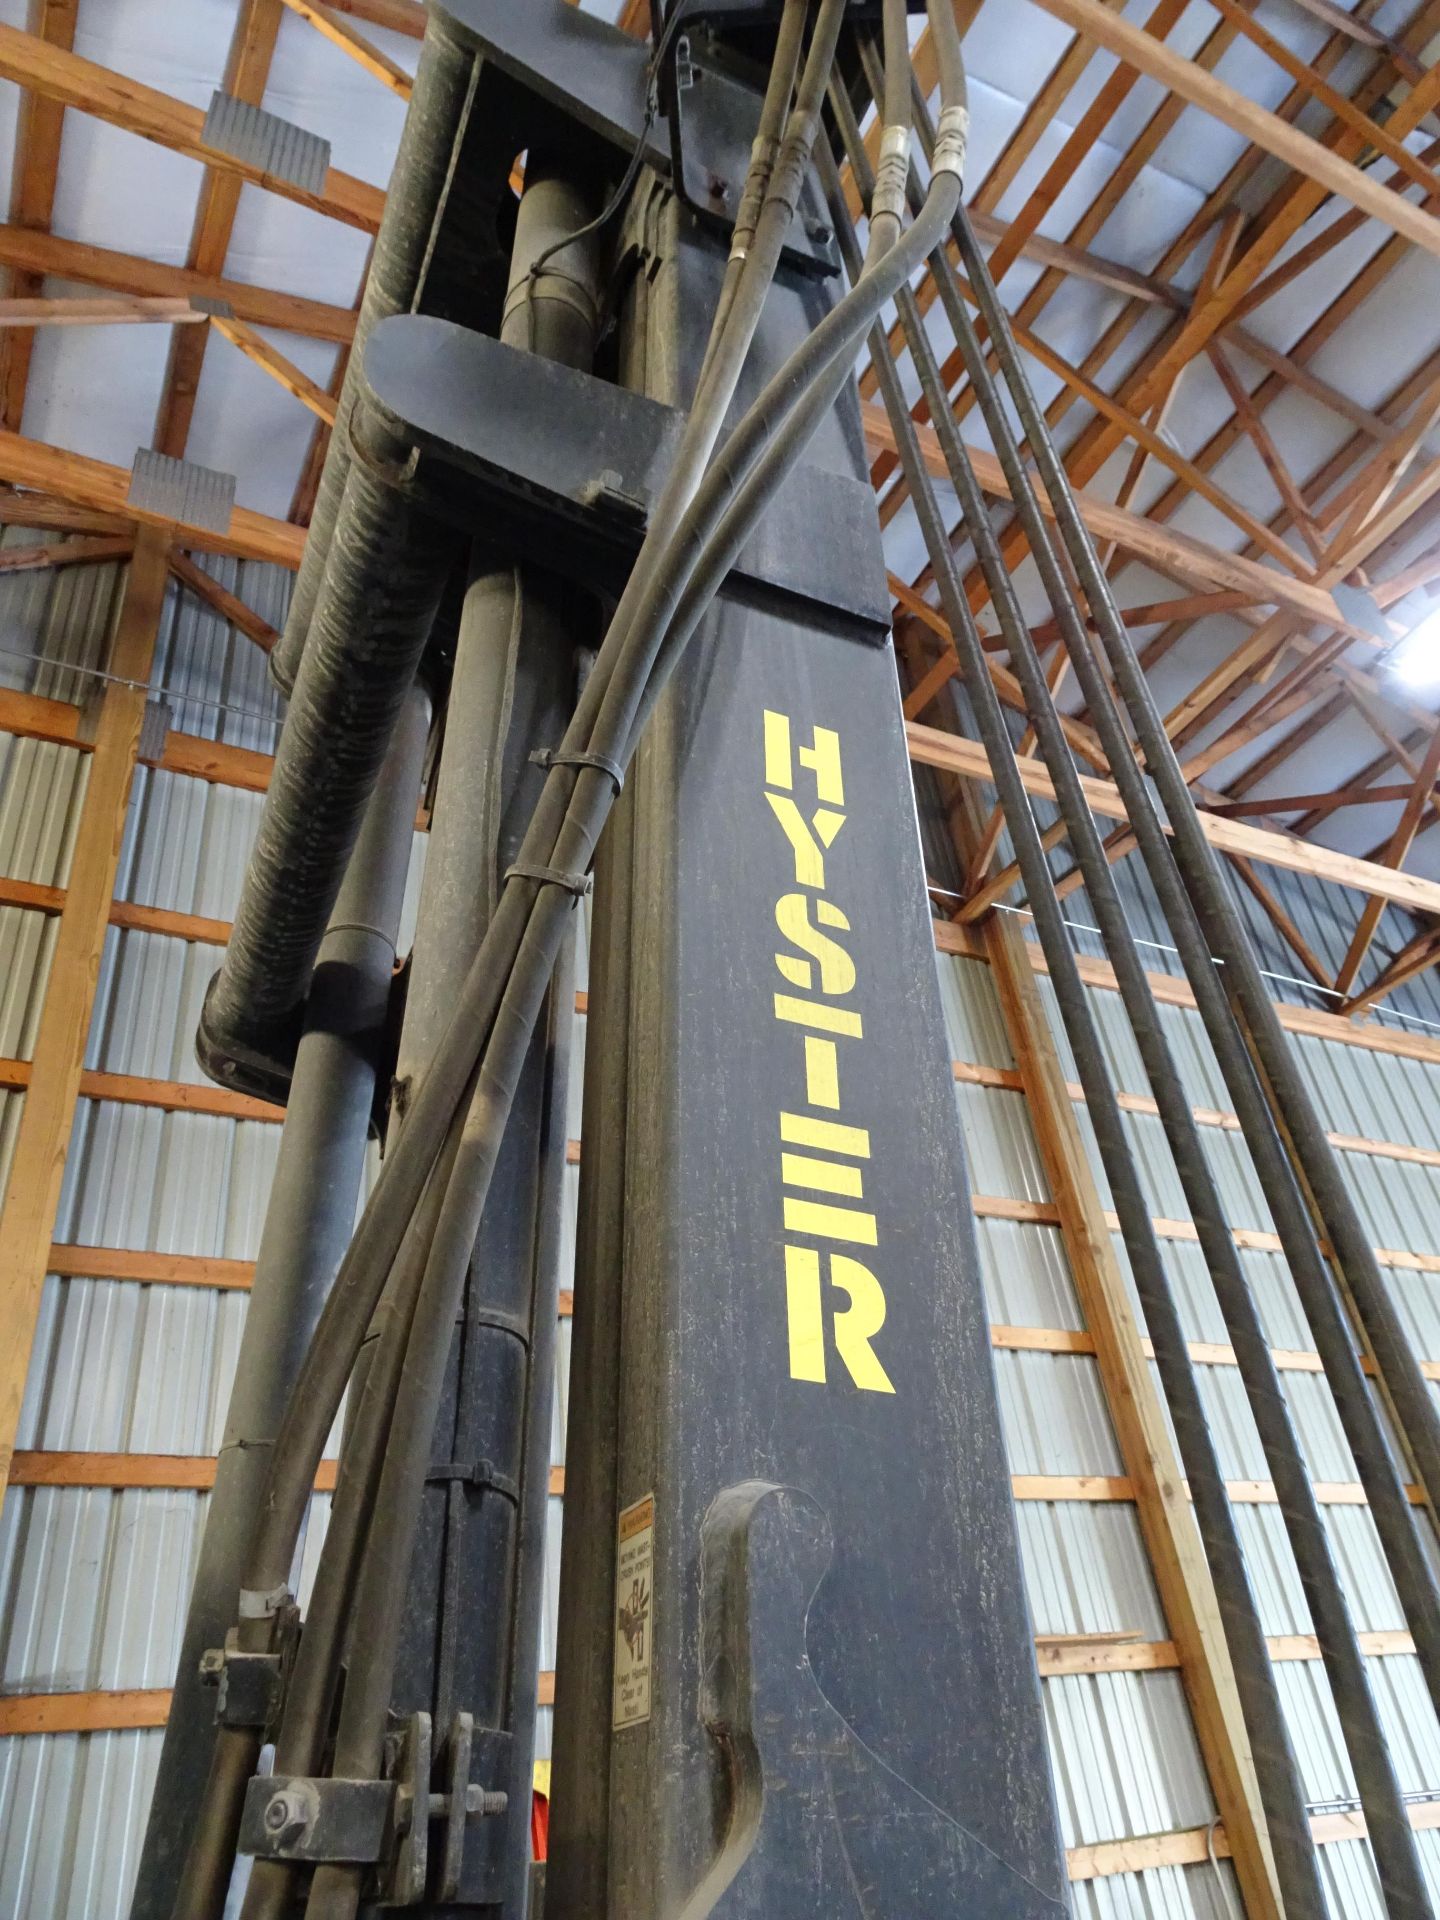 Hyster M17,600 lb Capacity Diesel Forklift - Image 3 of 4